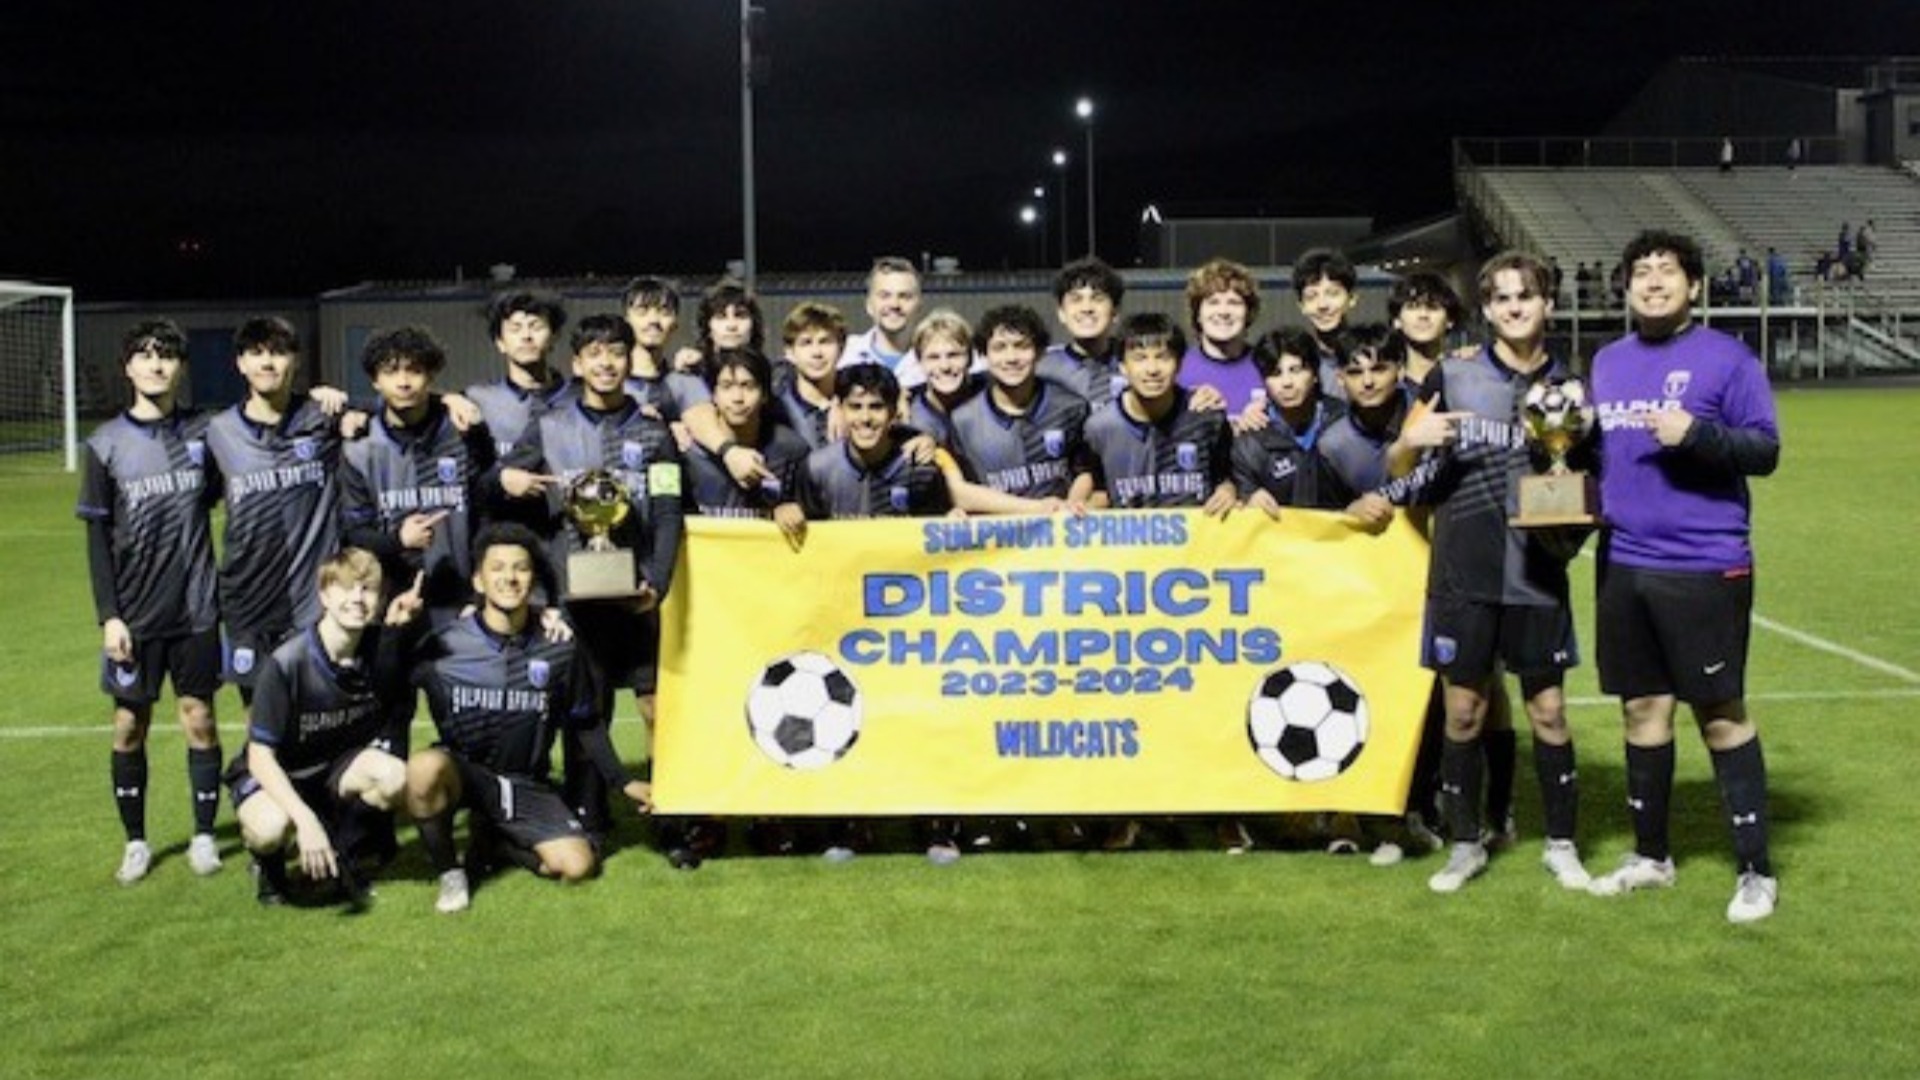 Slide 8 - District Champions 